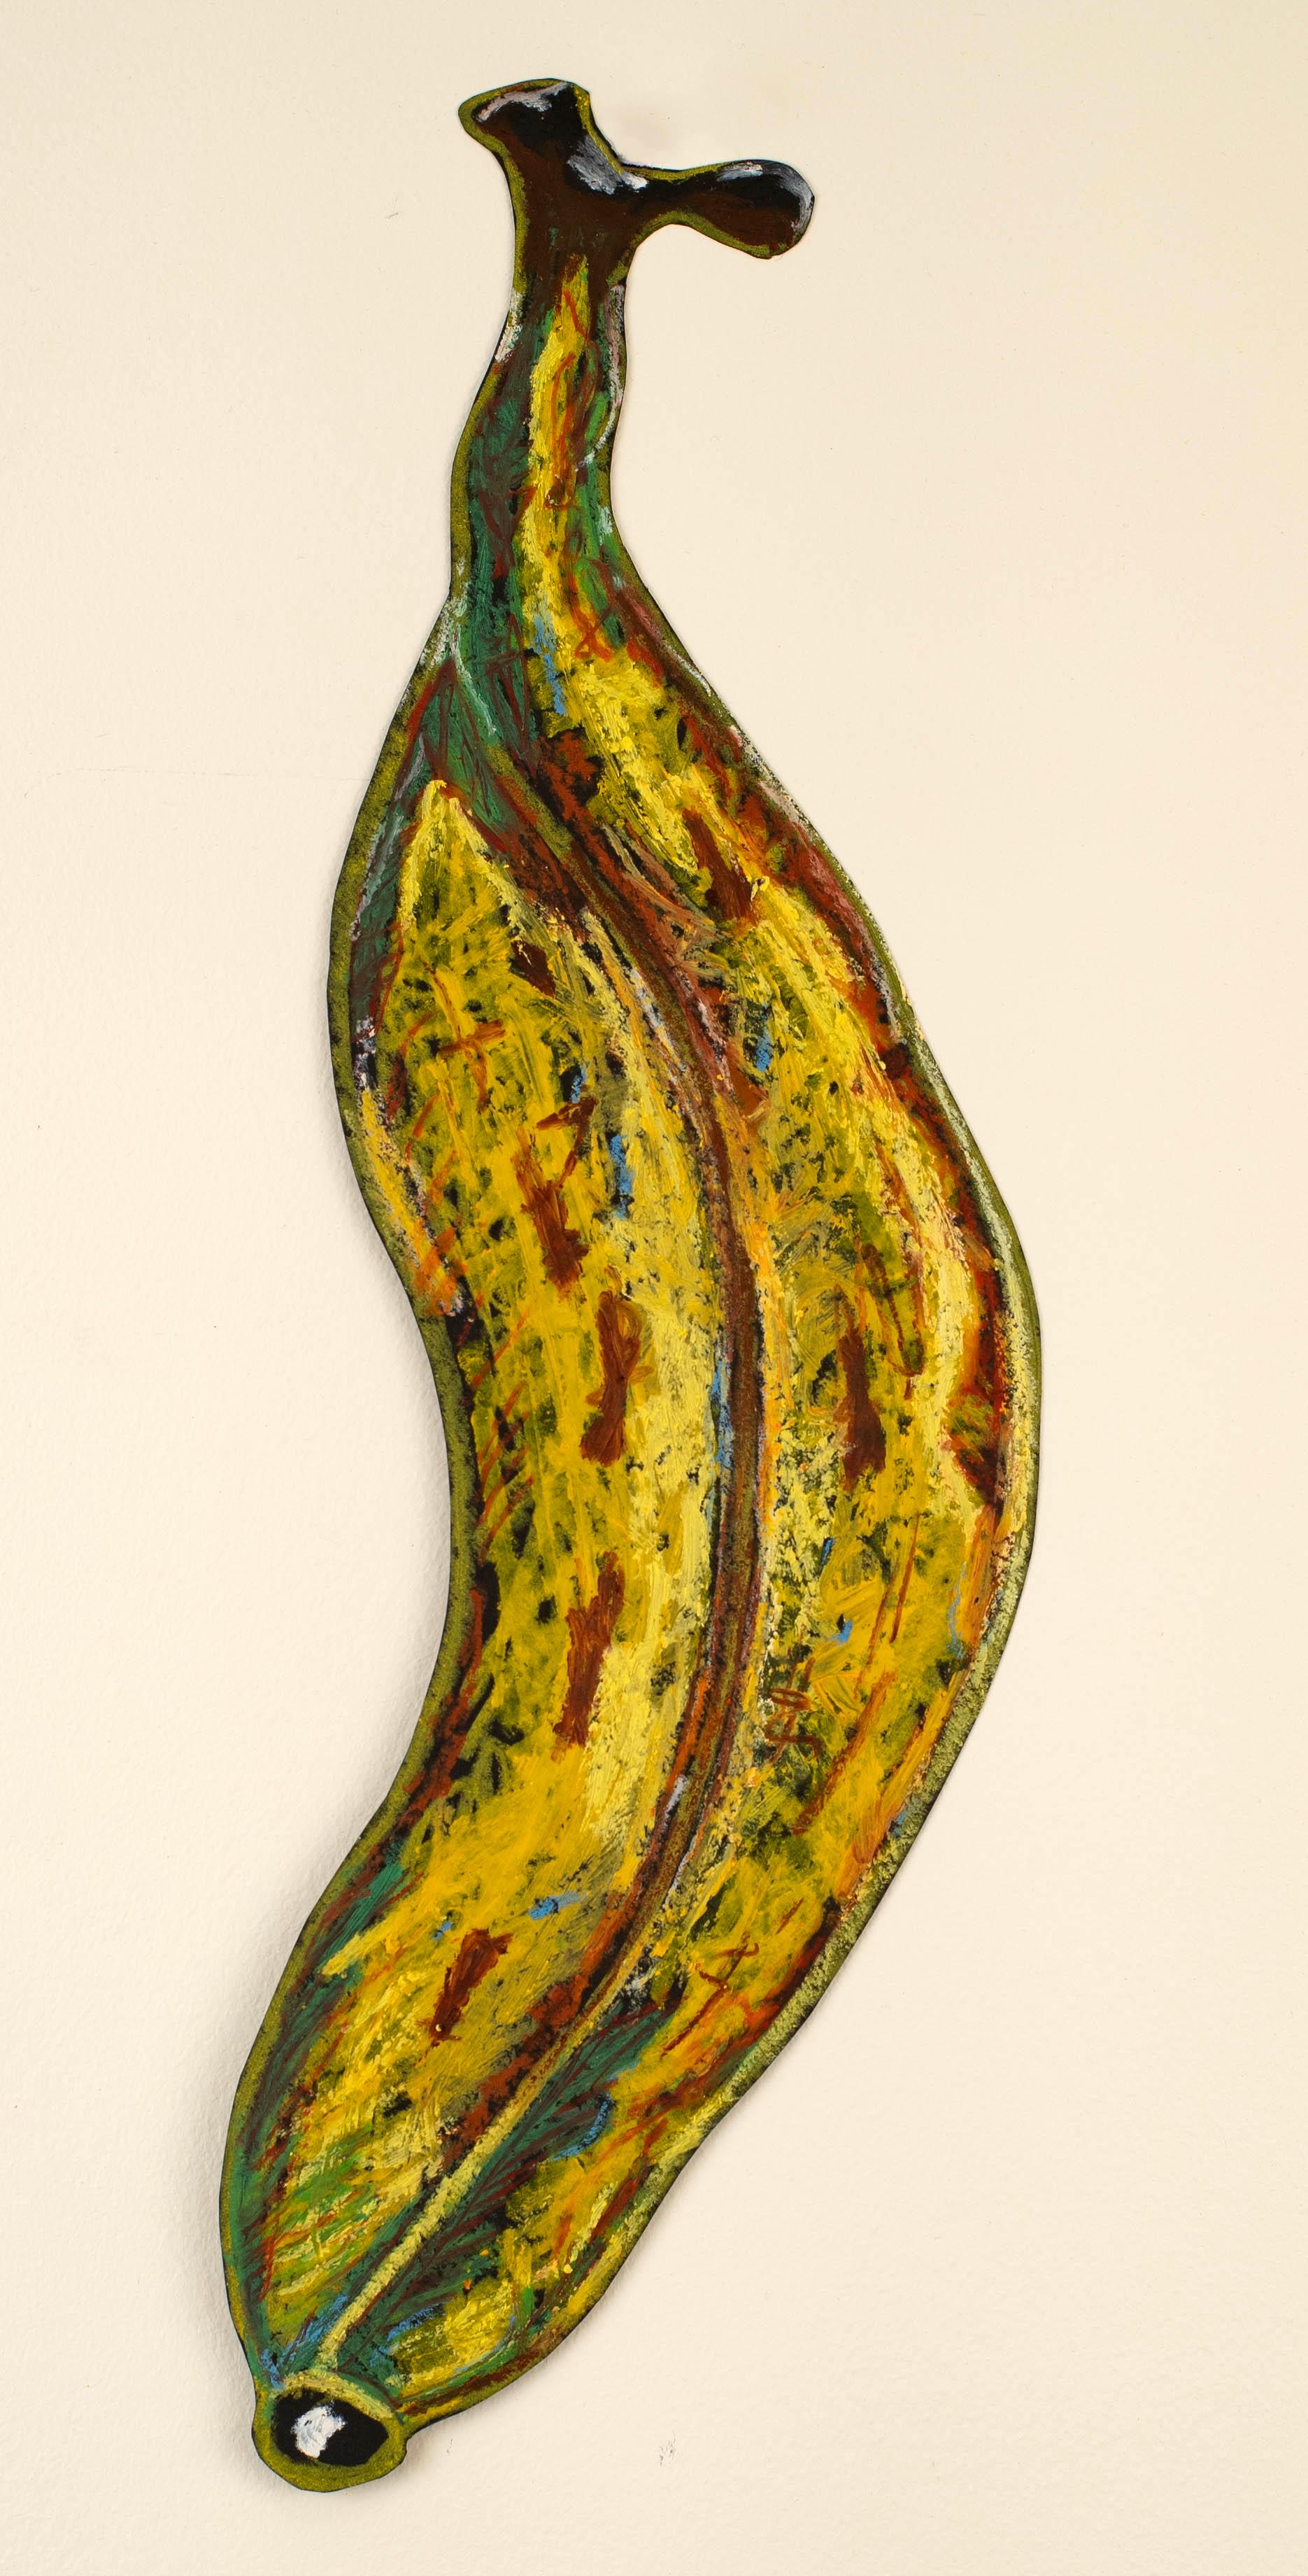 Dulphe Pinheiro Machado Figurative Art - Just Banana 